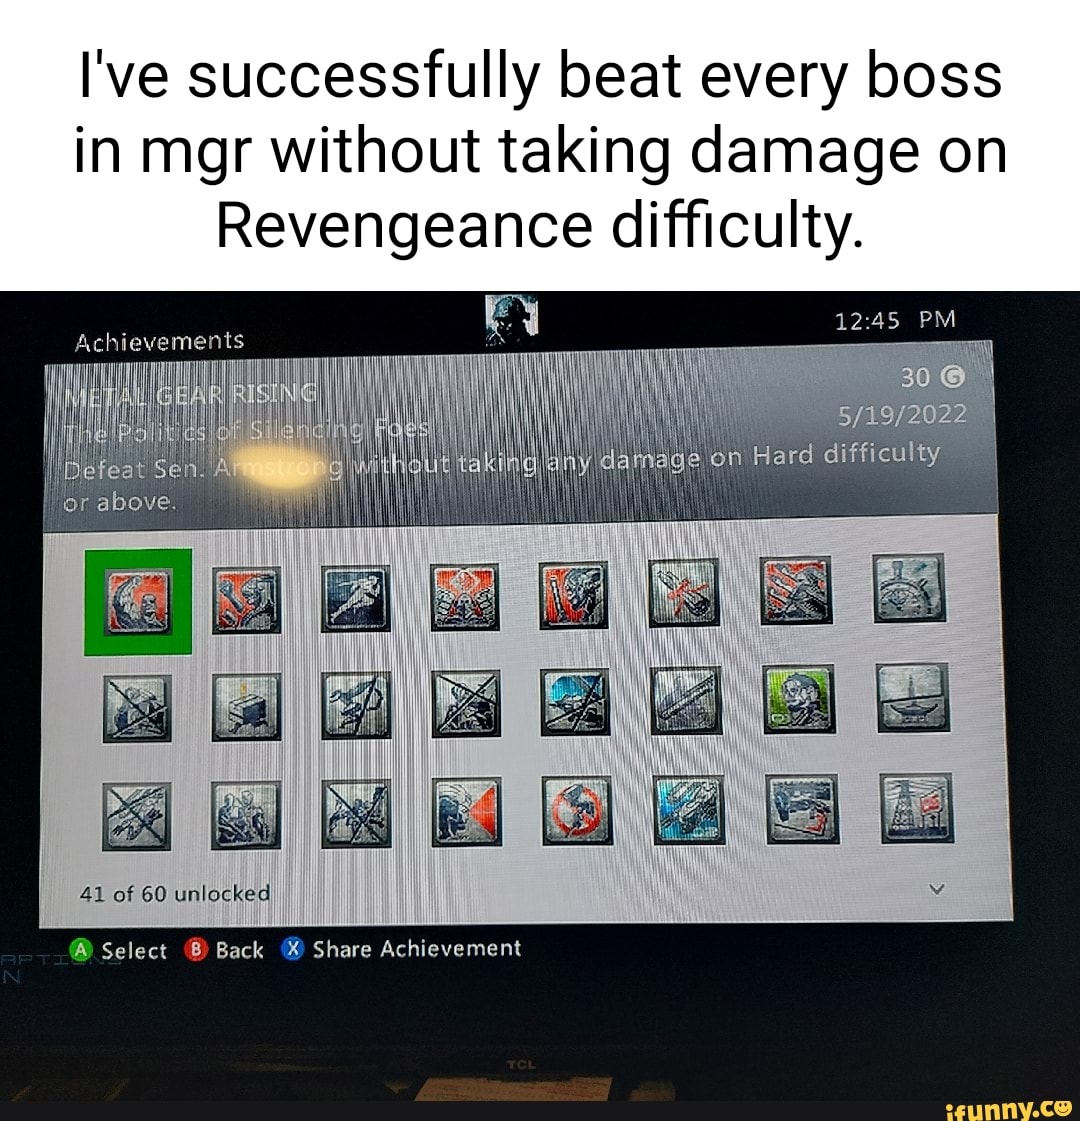 Metal Gear Rising: Revengeance - ALL BOSSES (No Damage